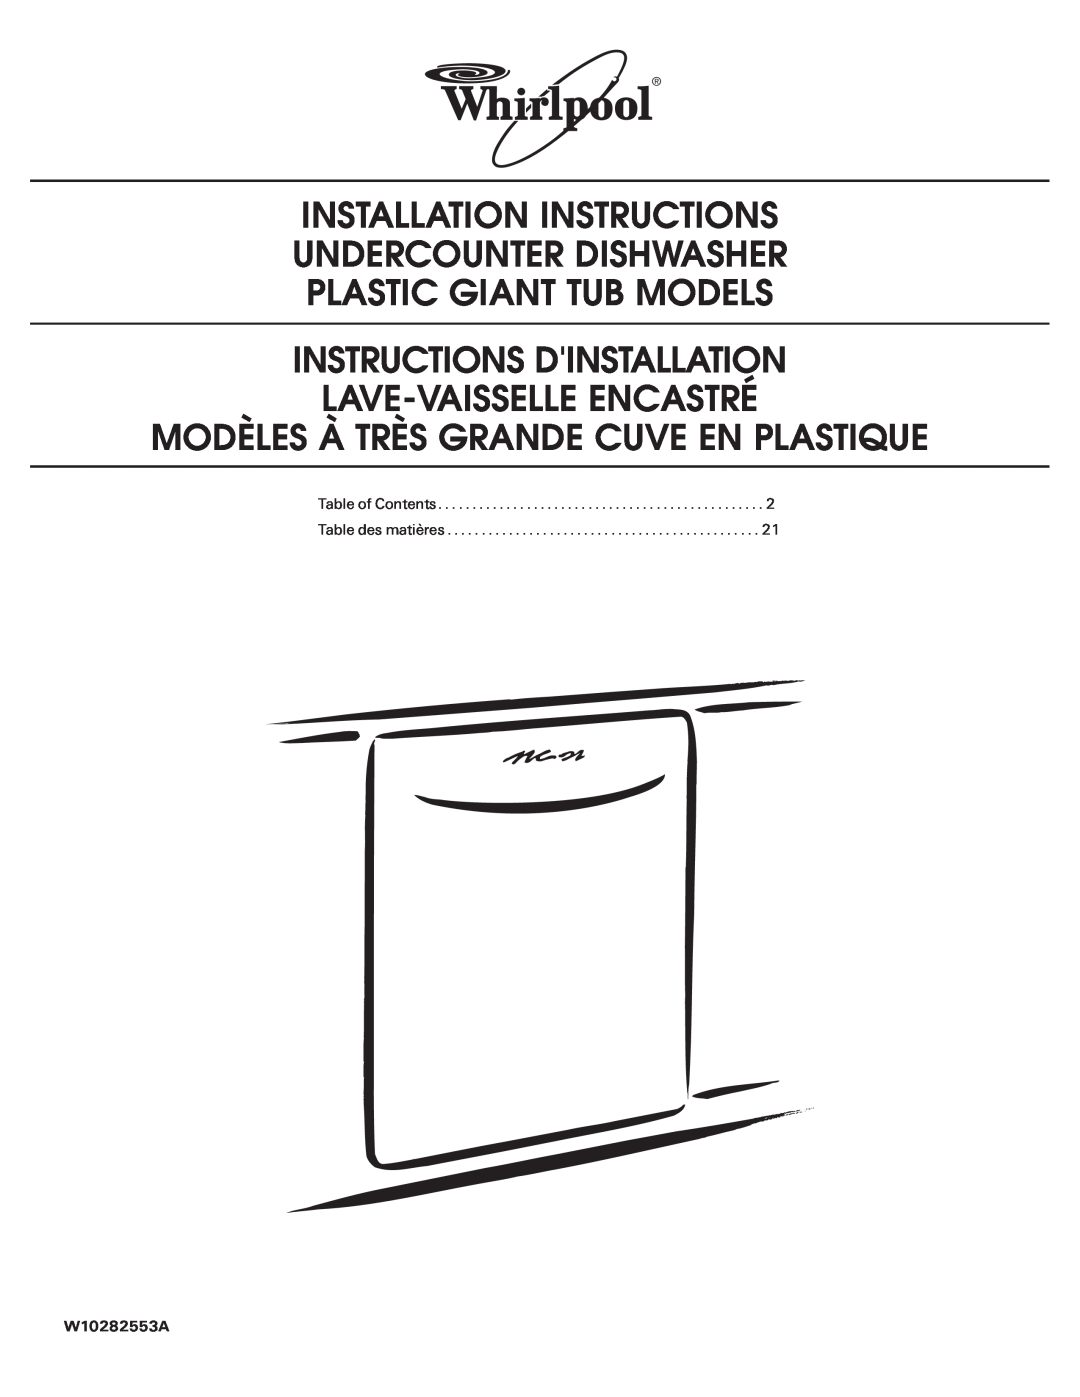 Maytag W10282553A installation instructions Installation Instructions Undercounter Dishwasher, Plastic Giant Tub Models 